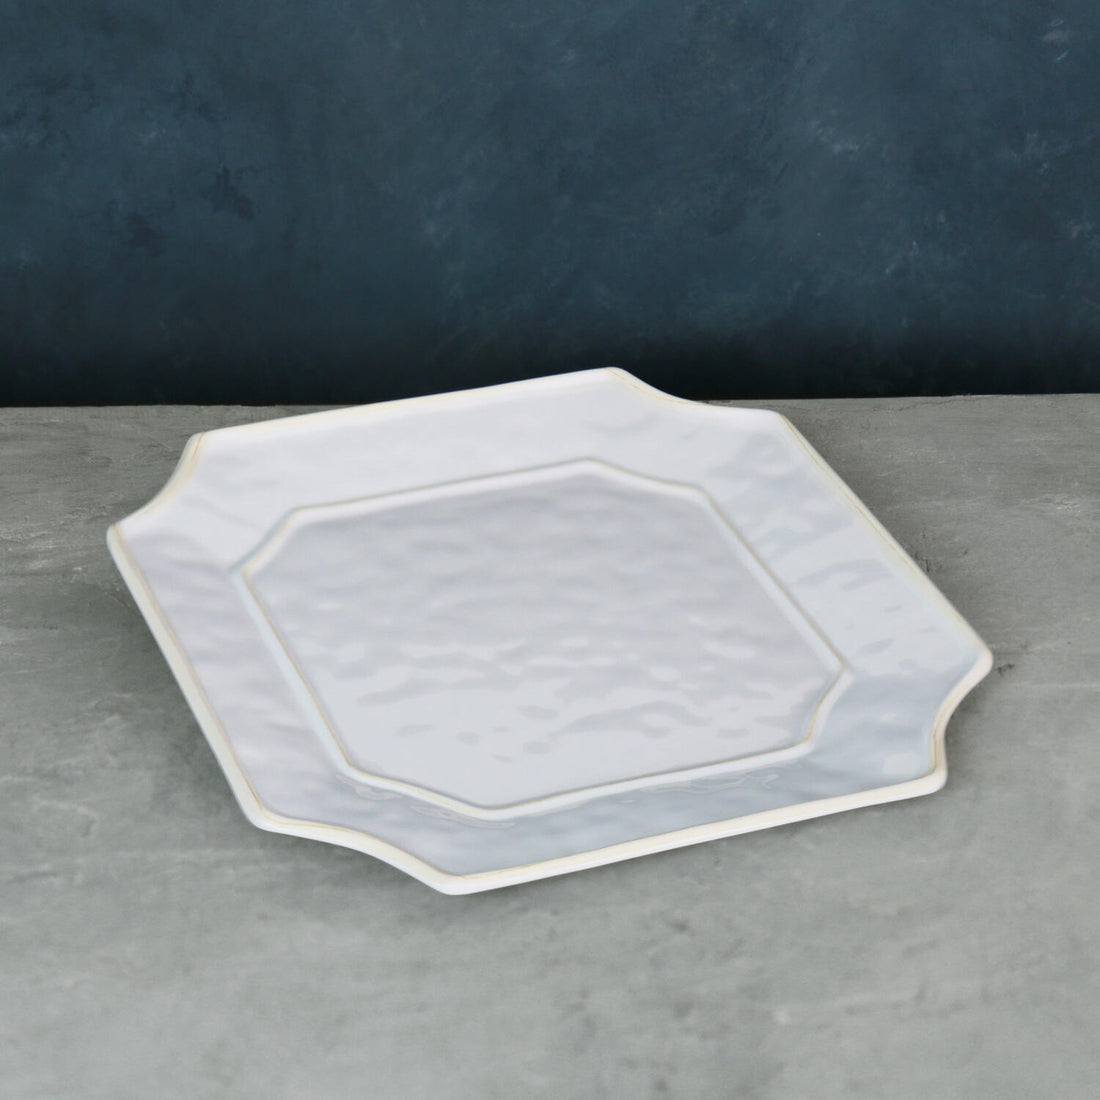 VIDA Charleston square platter white SECONDS - NON REFUNDABLE